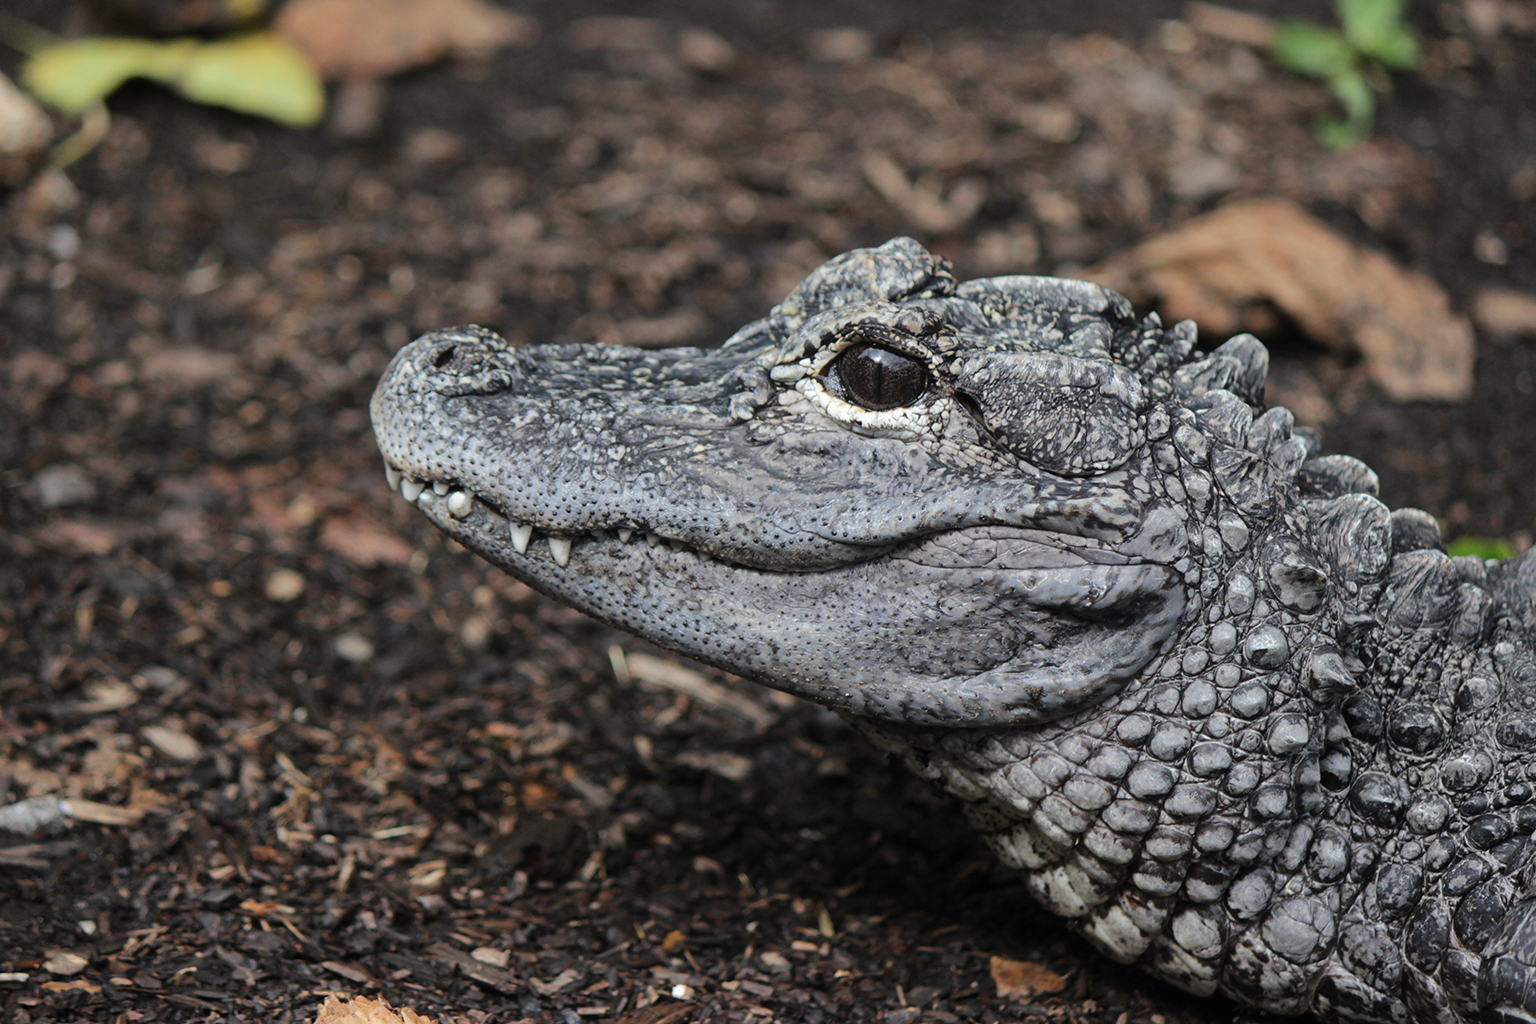 Chinese Alligator | The Maryland Zoo